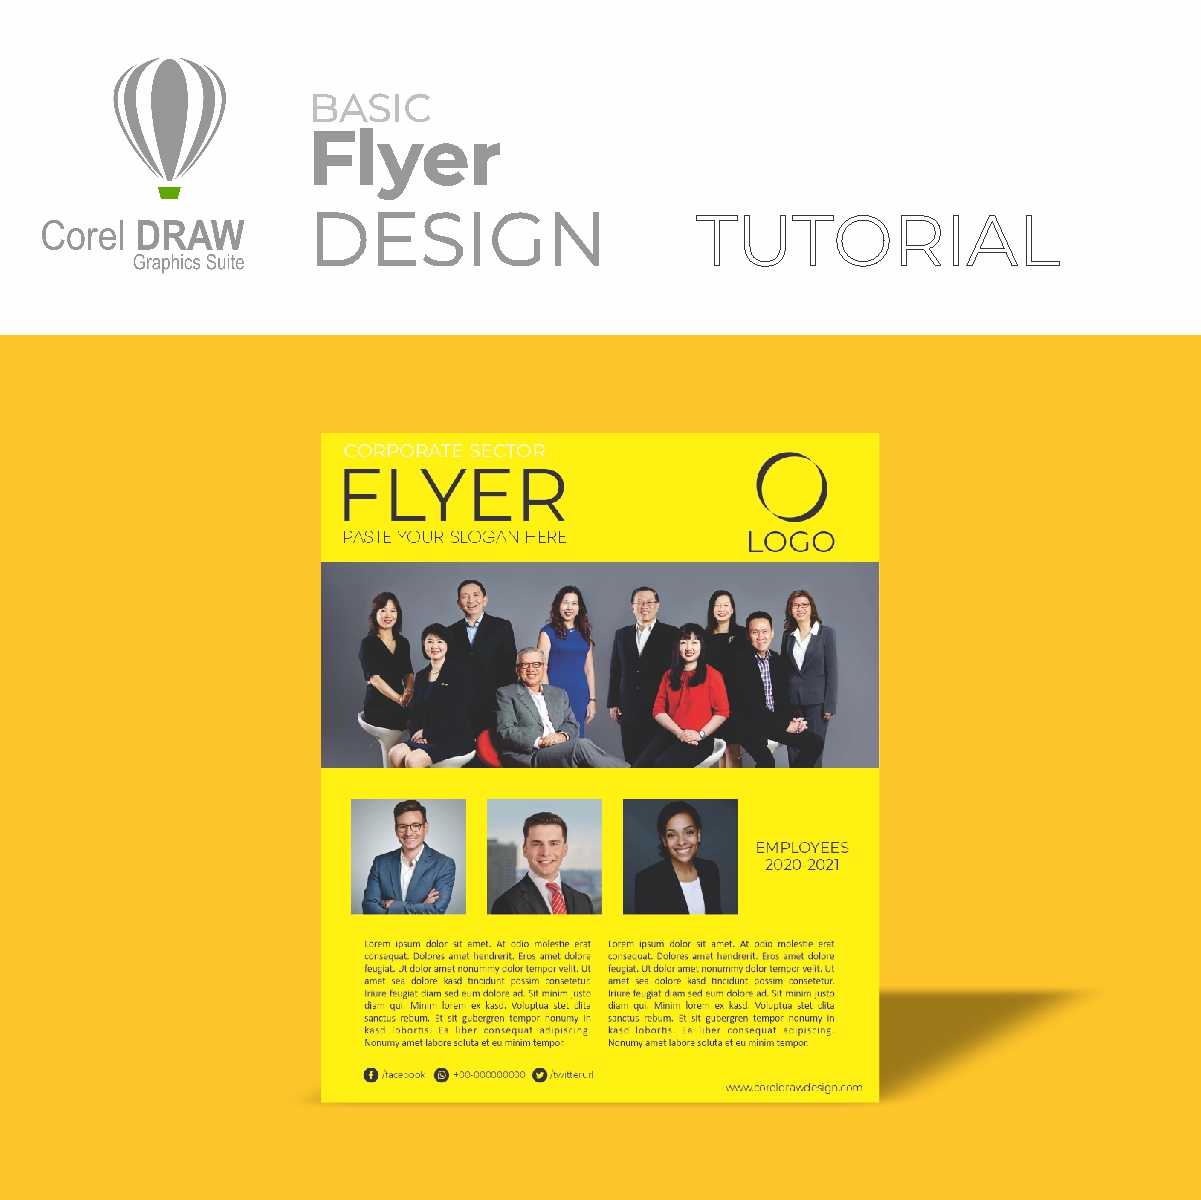 Creating Flyer - Digital Graphics - Tutorial - Coreldraw for Beginners